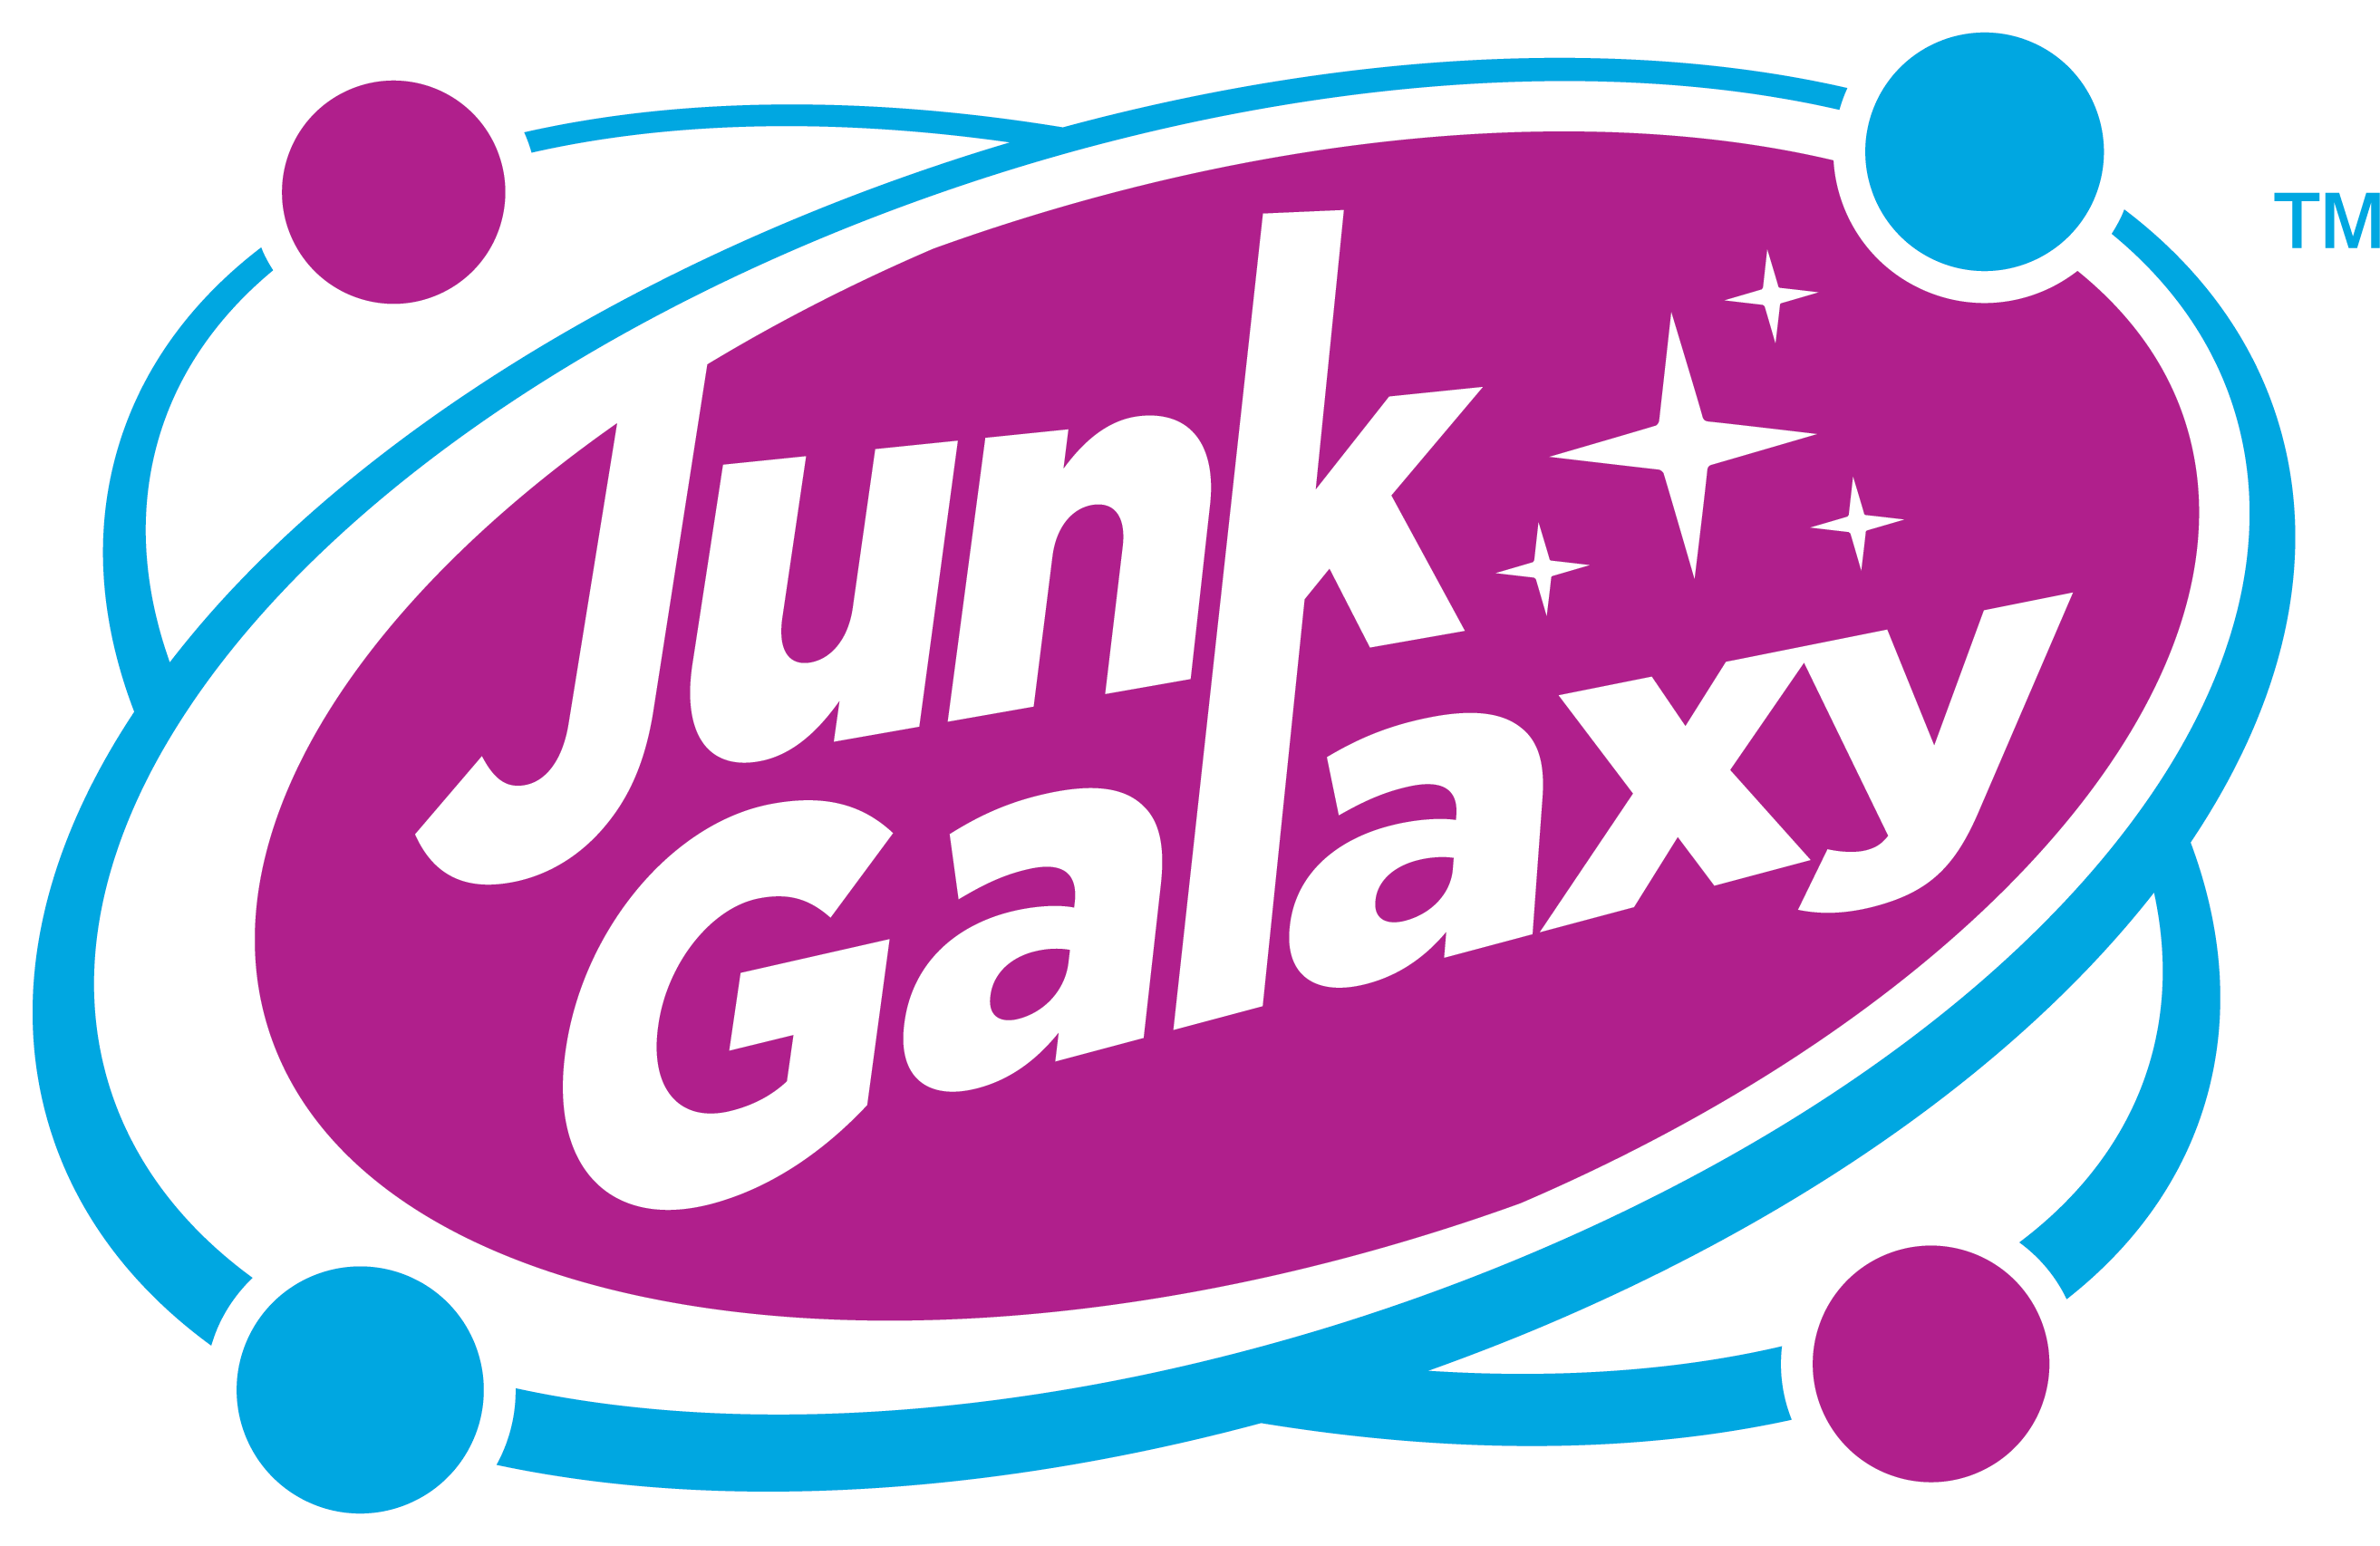 Junk Galaxy